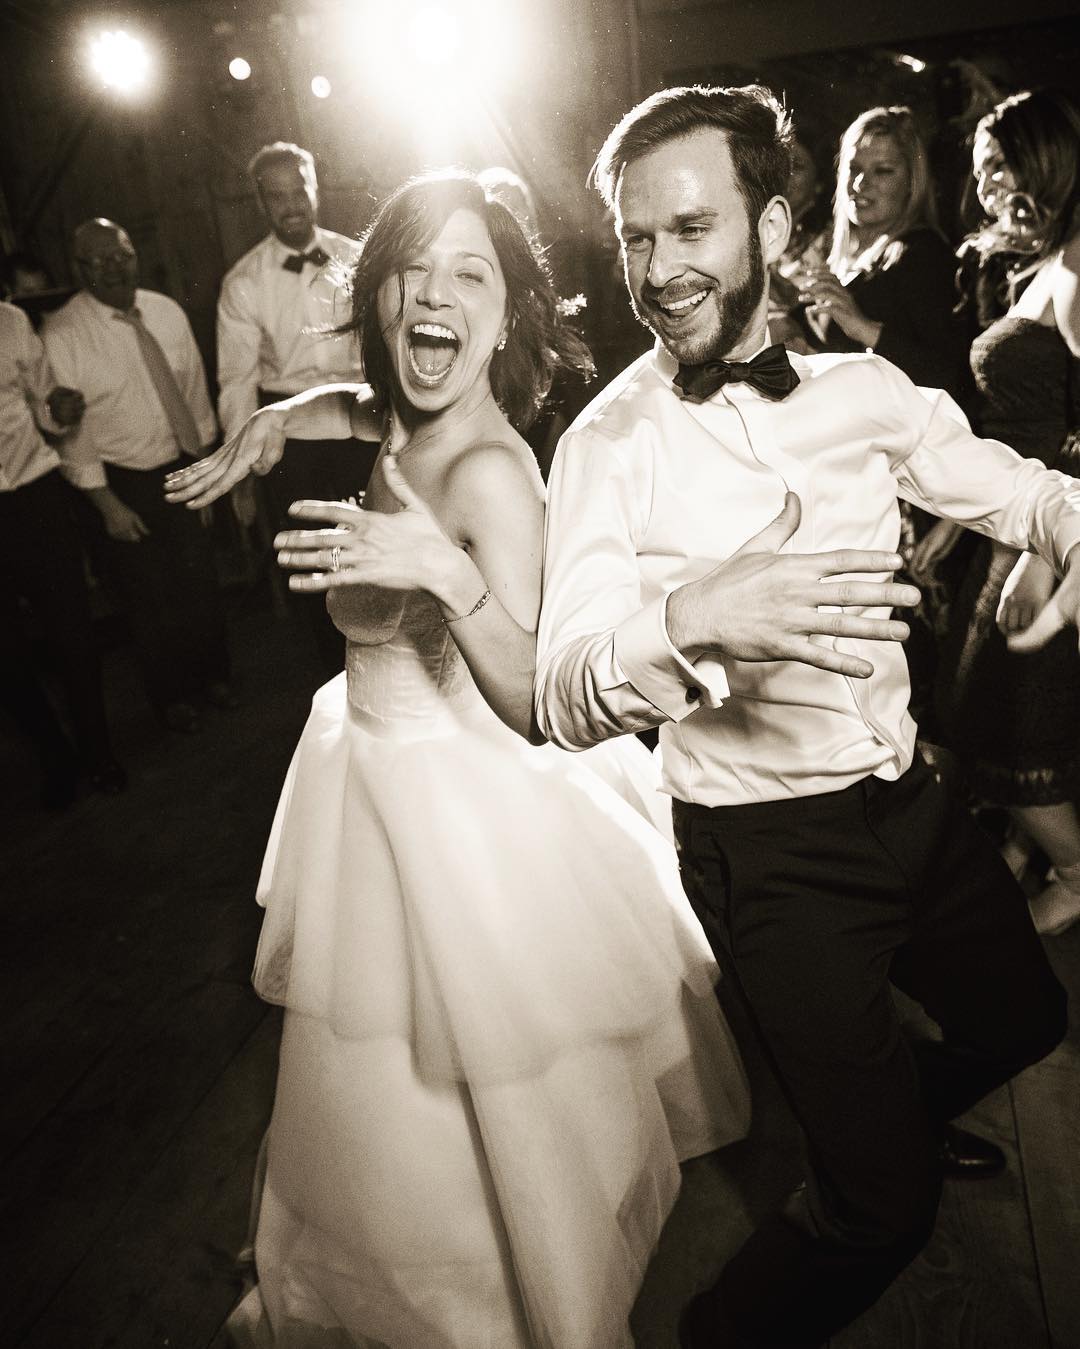 A bride and groom dancing on the dance floor